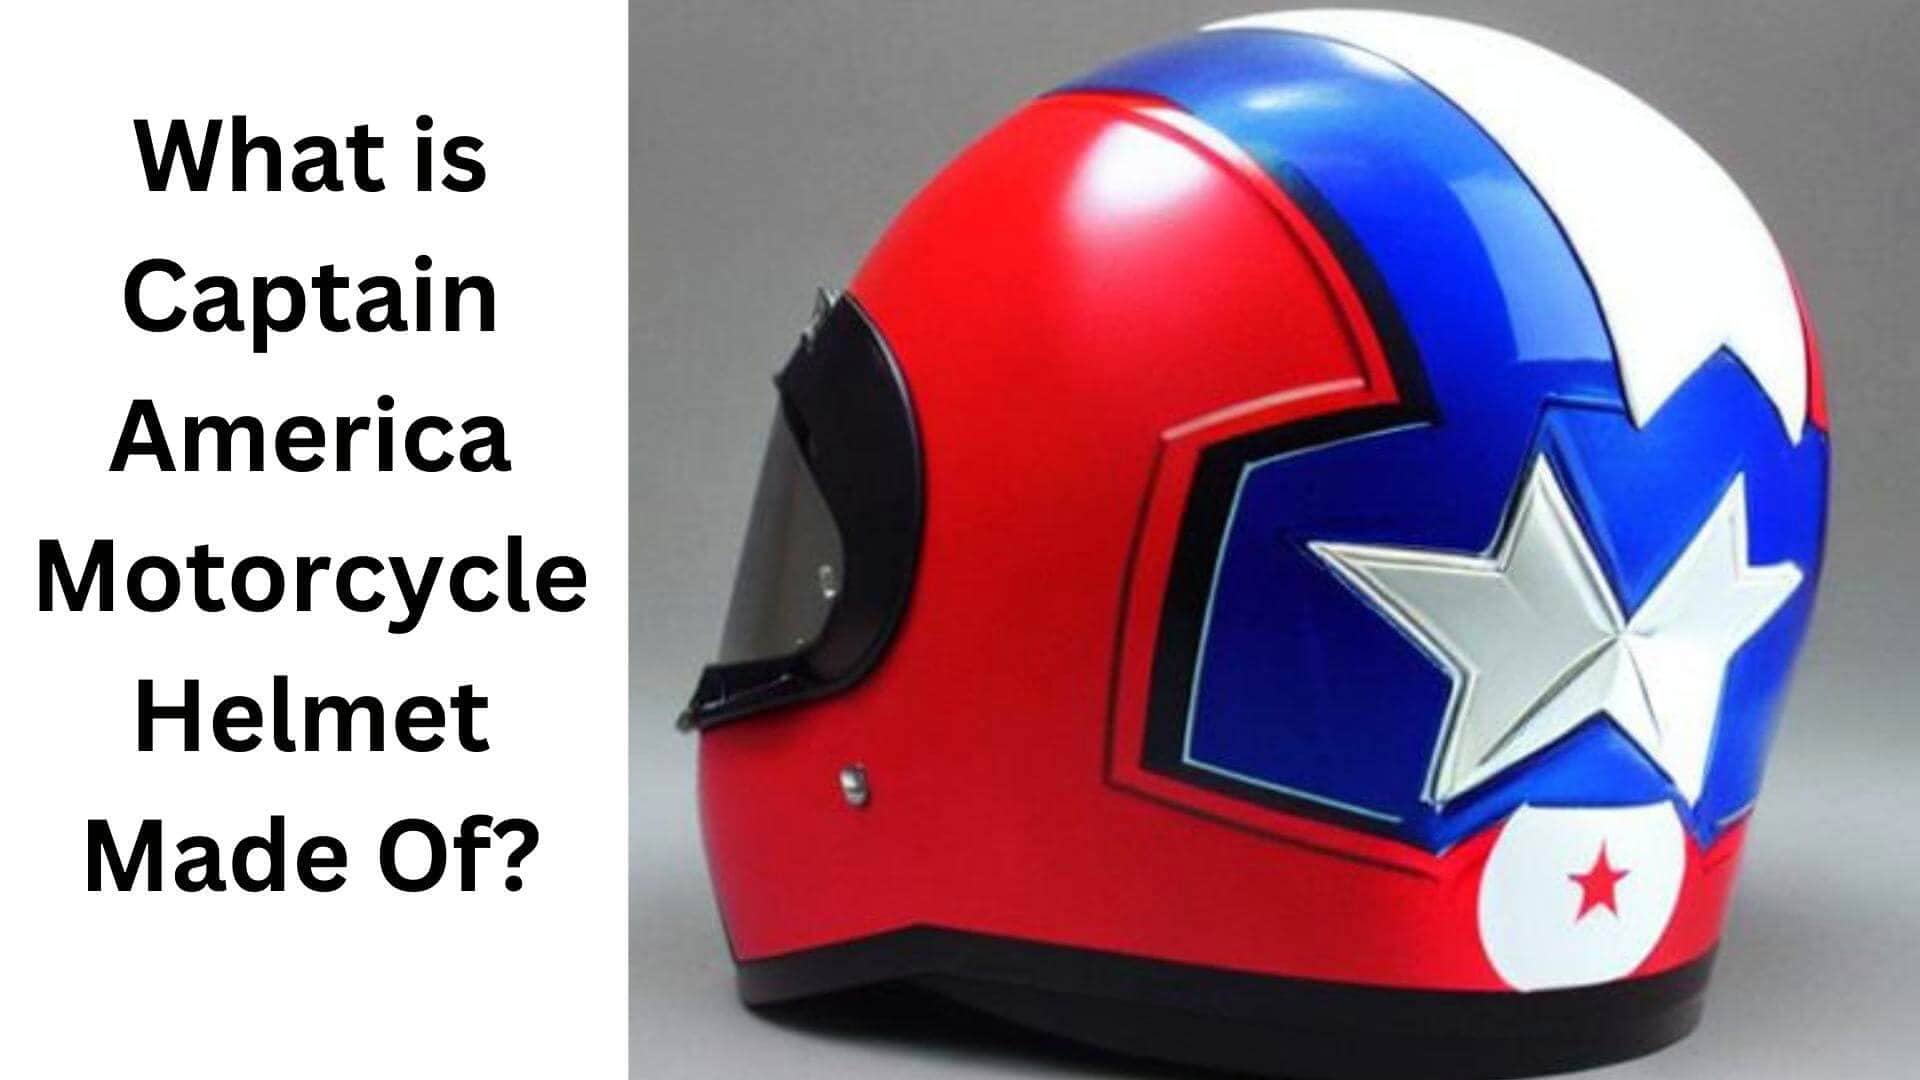 What is Captain America’s Motorcycle Helmet Made Of?